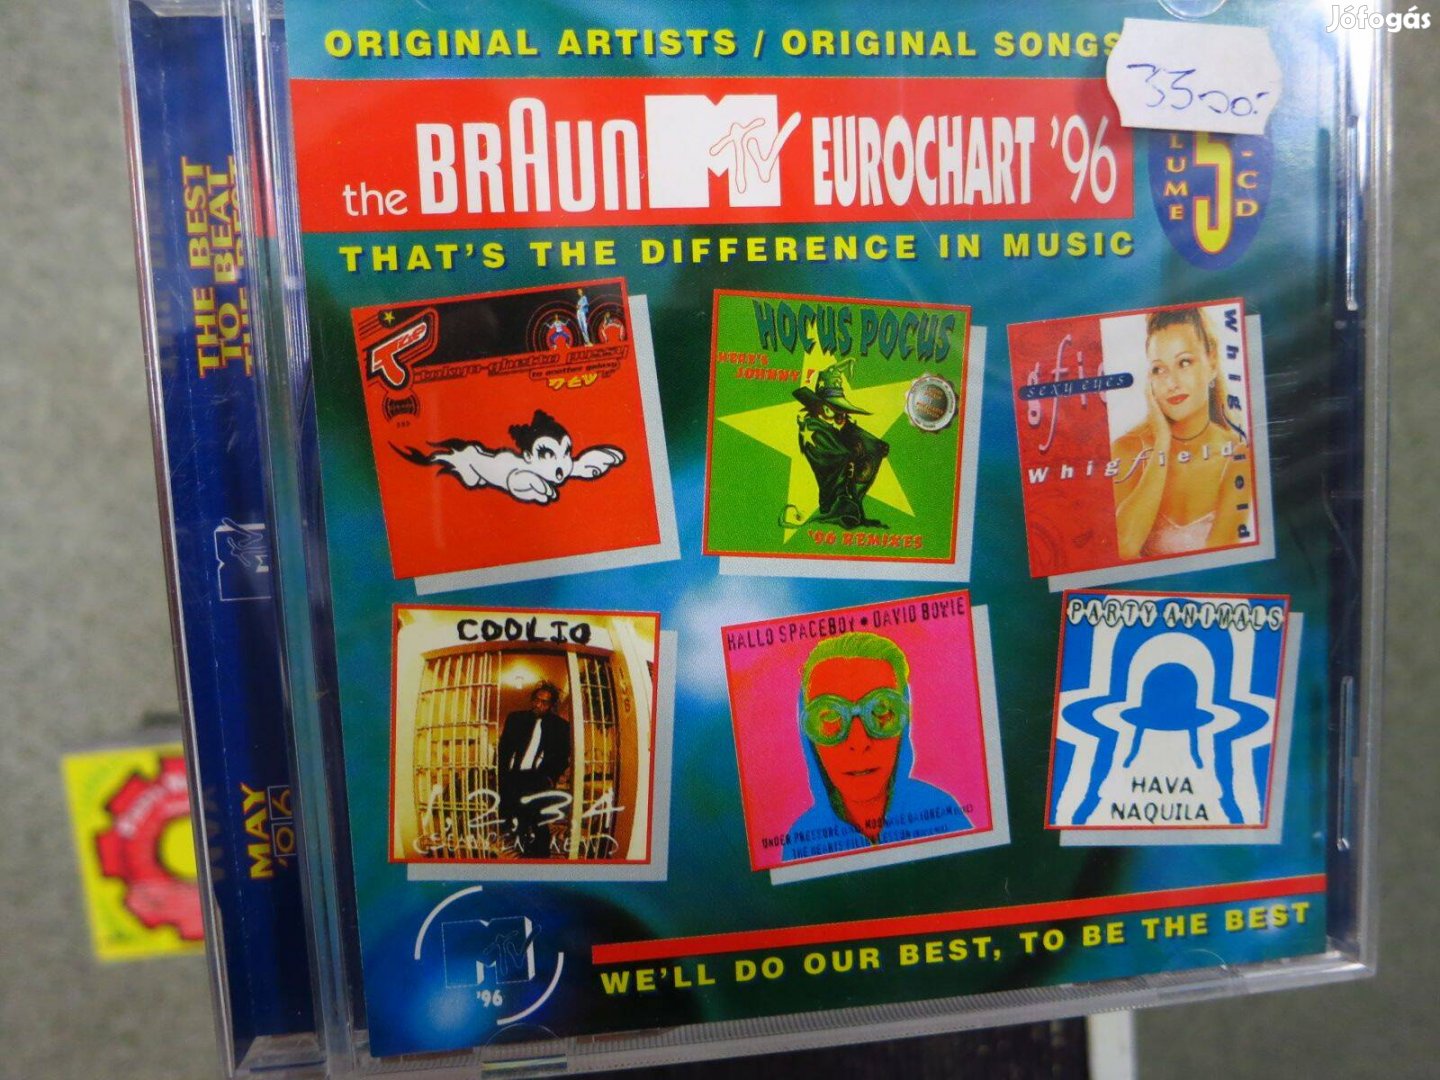 The Braun MTV Eurochart '96 Vol. 5 - May